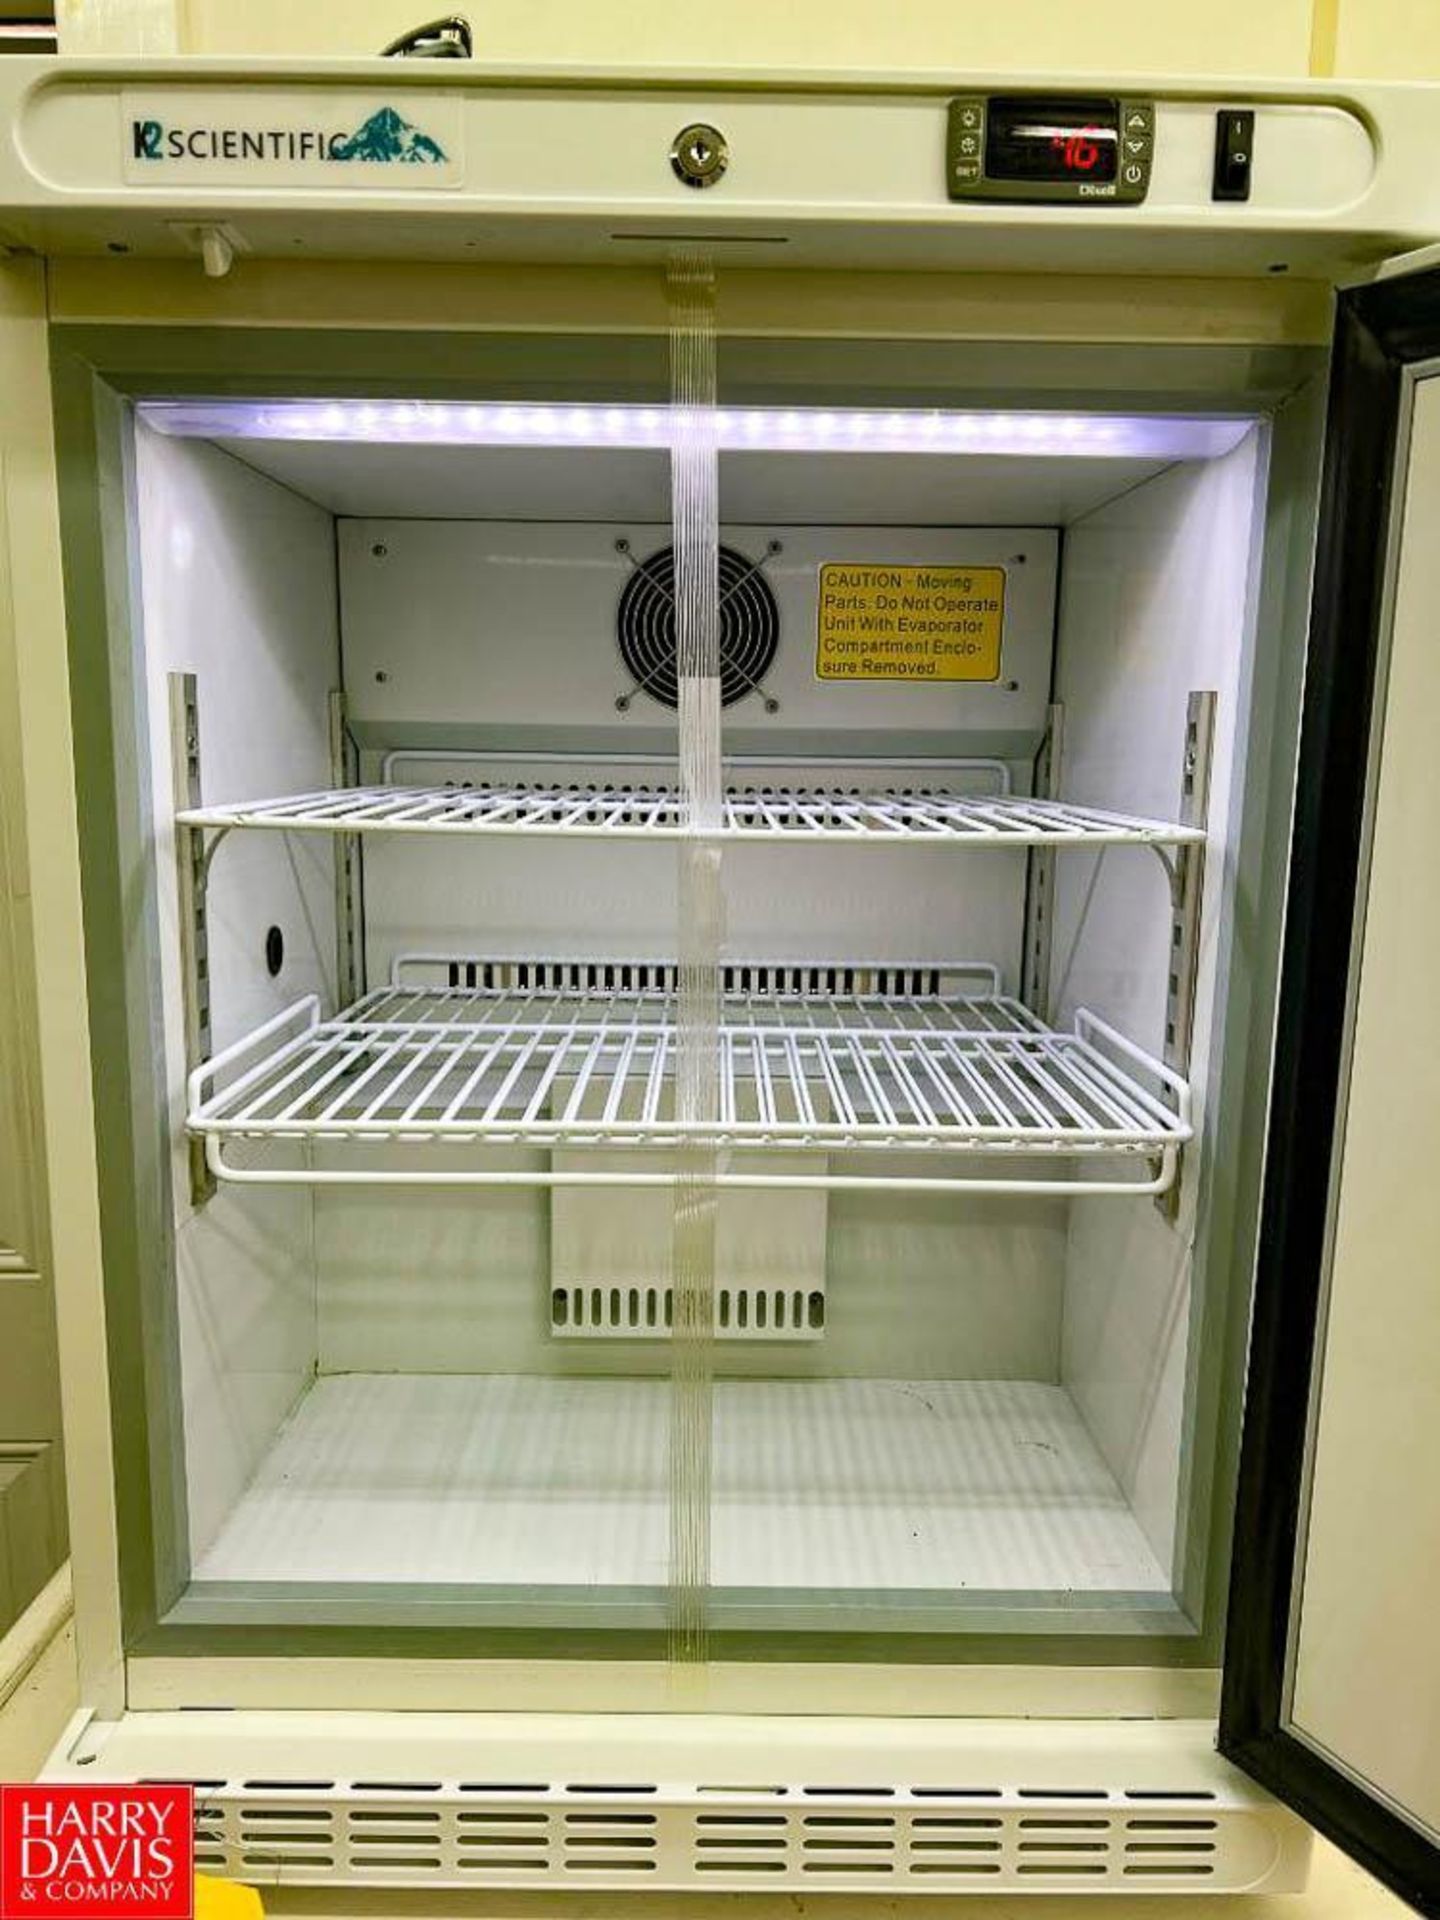 NEW K2 Scientific Lab Refrigerator - Image 4 of 4